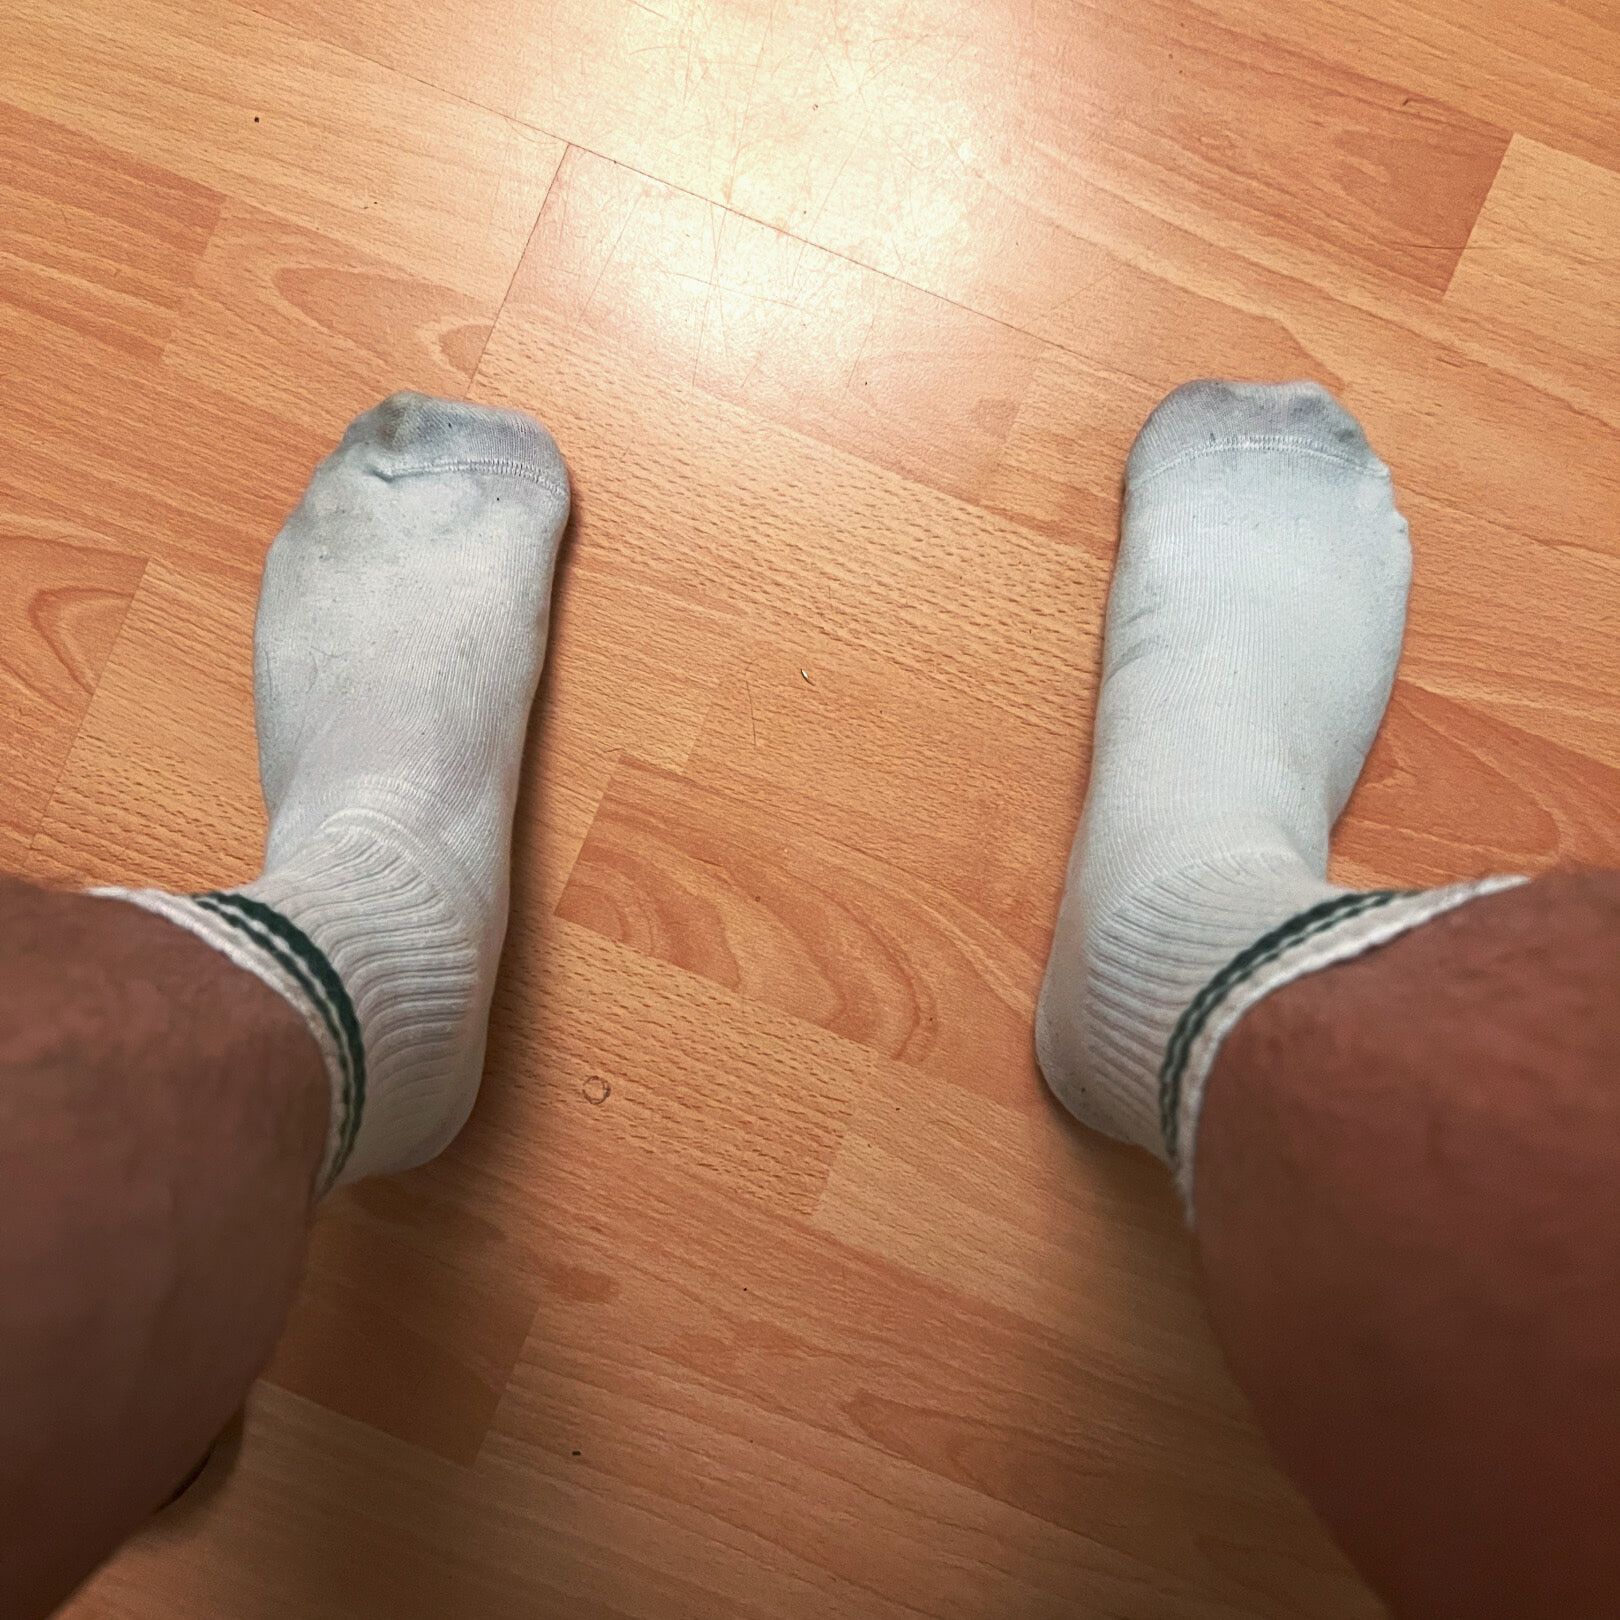 My dick, socks and underwear #3